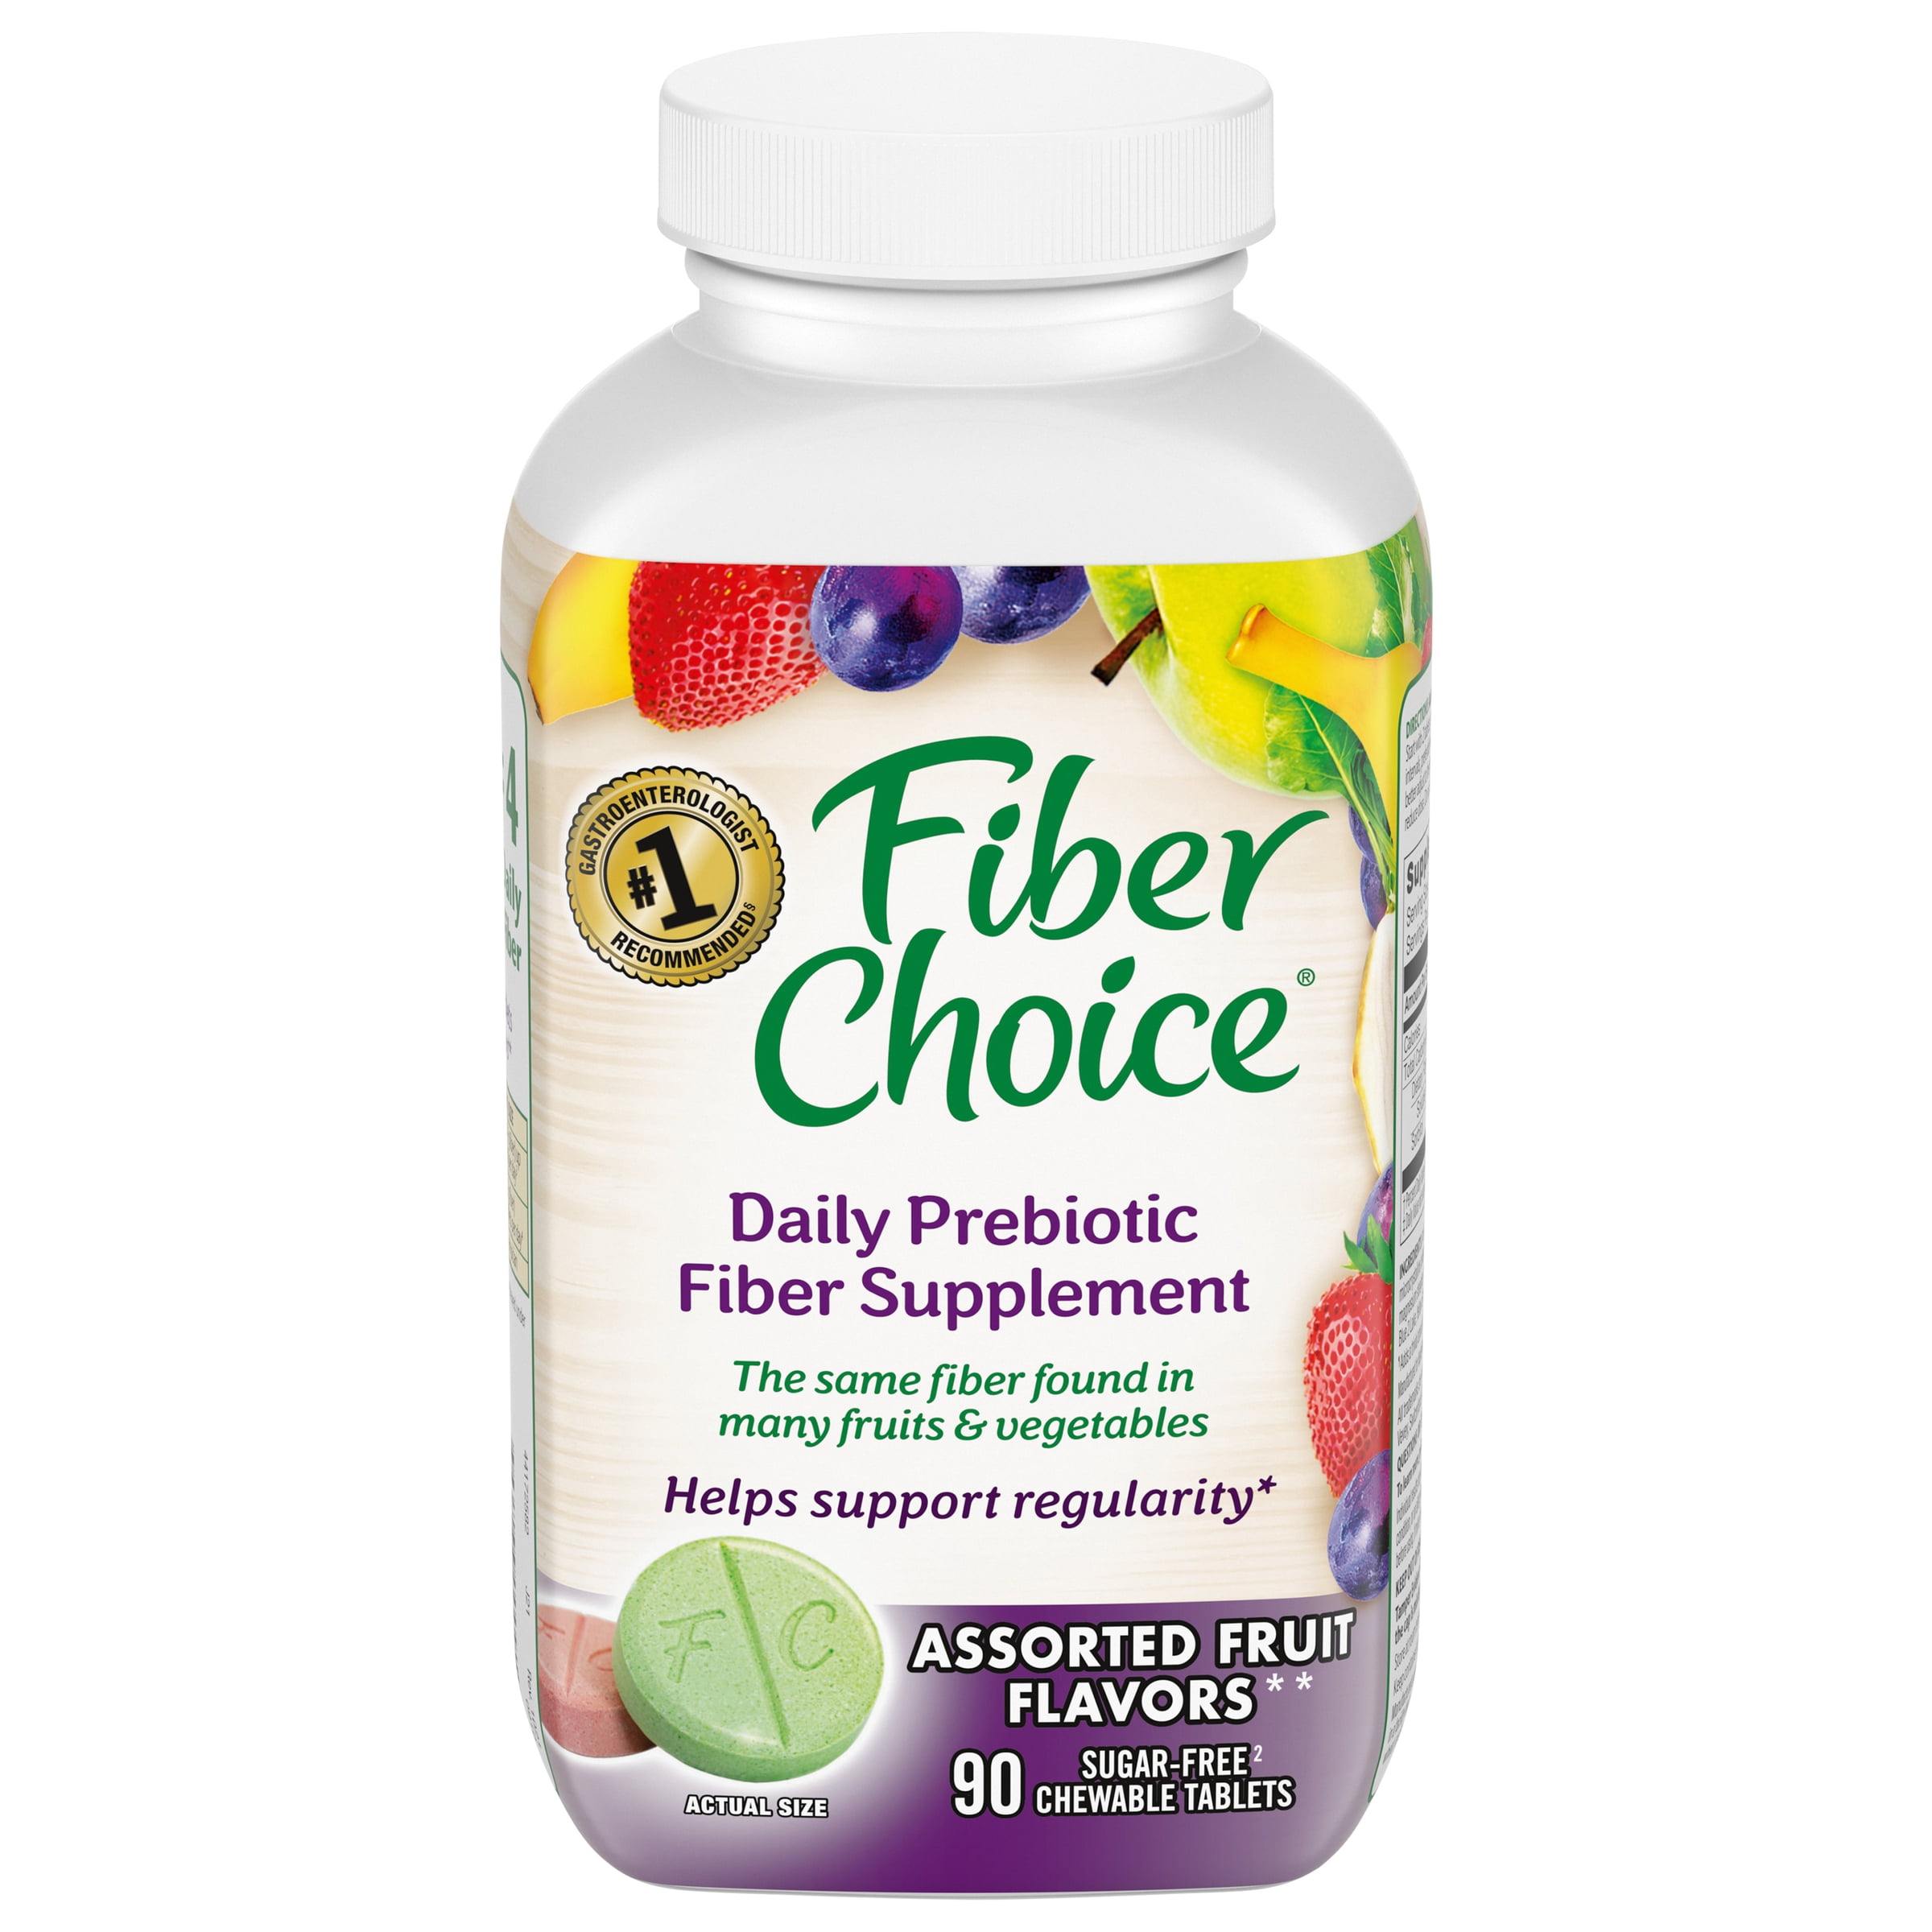 Fiber Choice Daily Prebiotic Fiber Supplement, Assorted Fruit Chewable Tablets, 90 Count